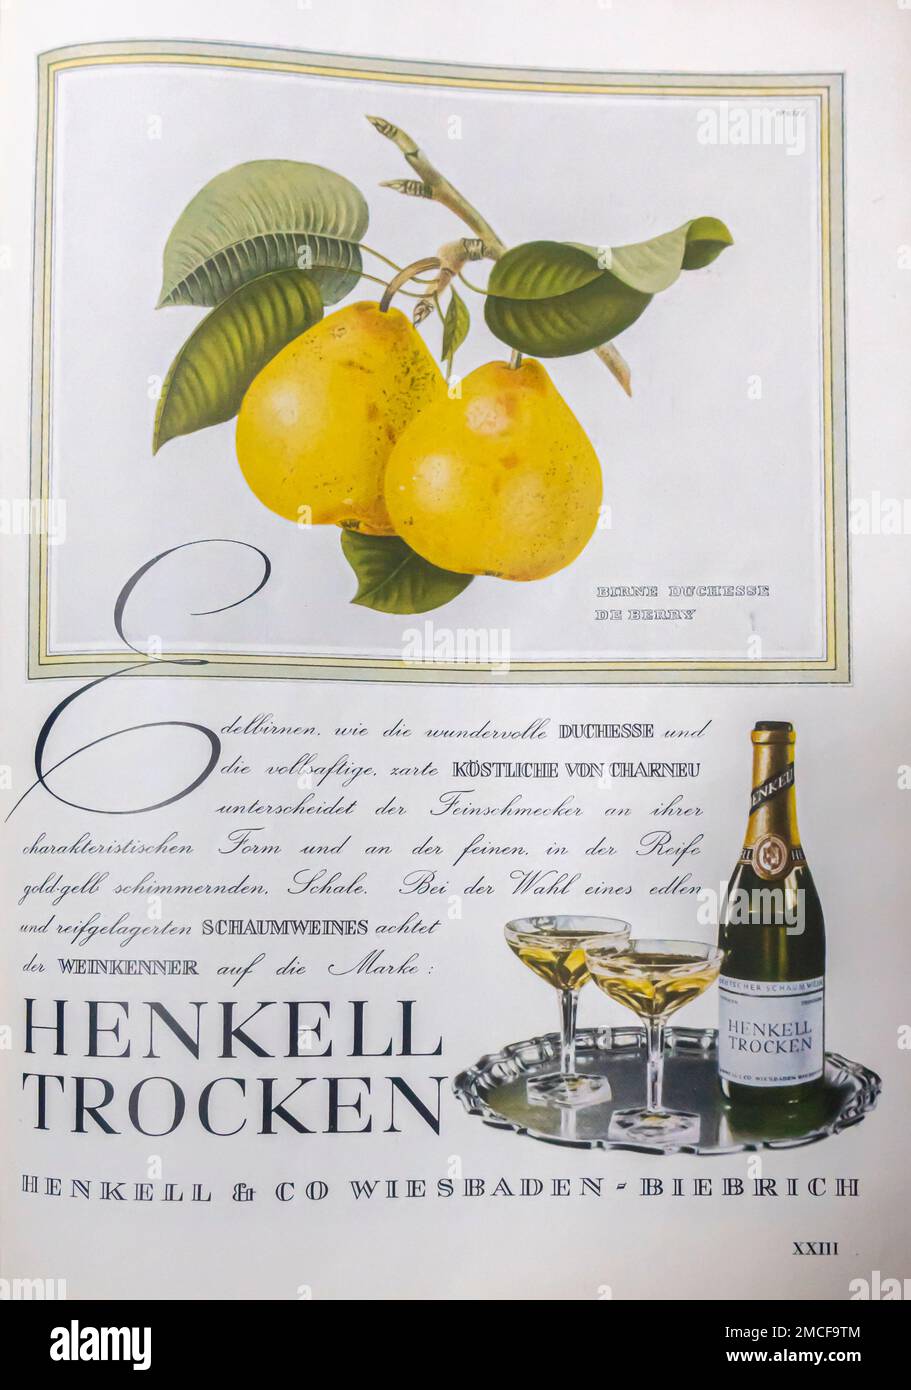 Henkell Trocken German wine advert, December 1940 magazine, Germany Stock Photo